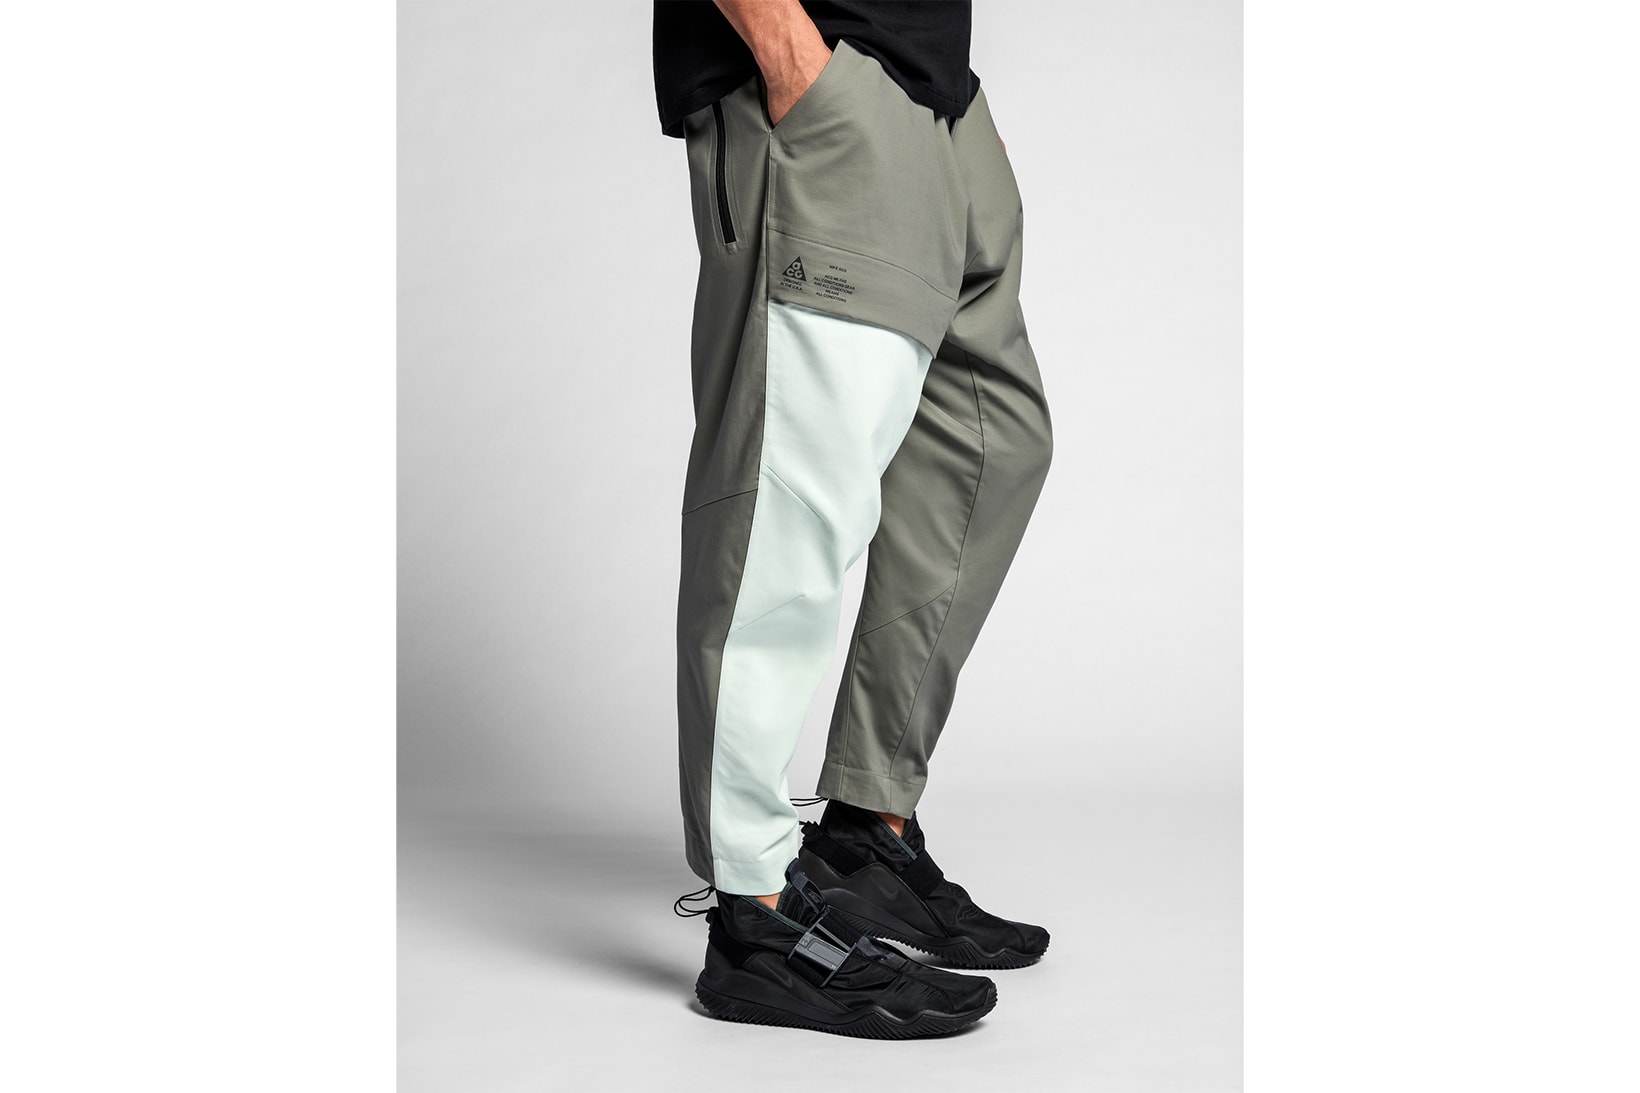 NikeLab ACG Holiday 2017 Collection Nike ACRONYM Errolson Hugh Lookbook Jackets Long Sleeves Outerwear Techwear